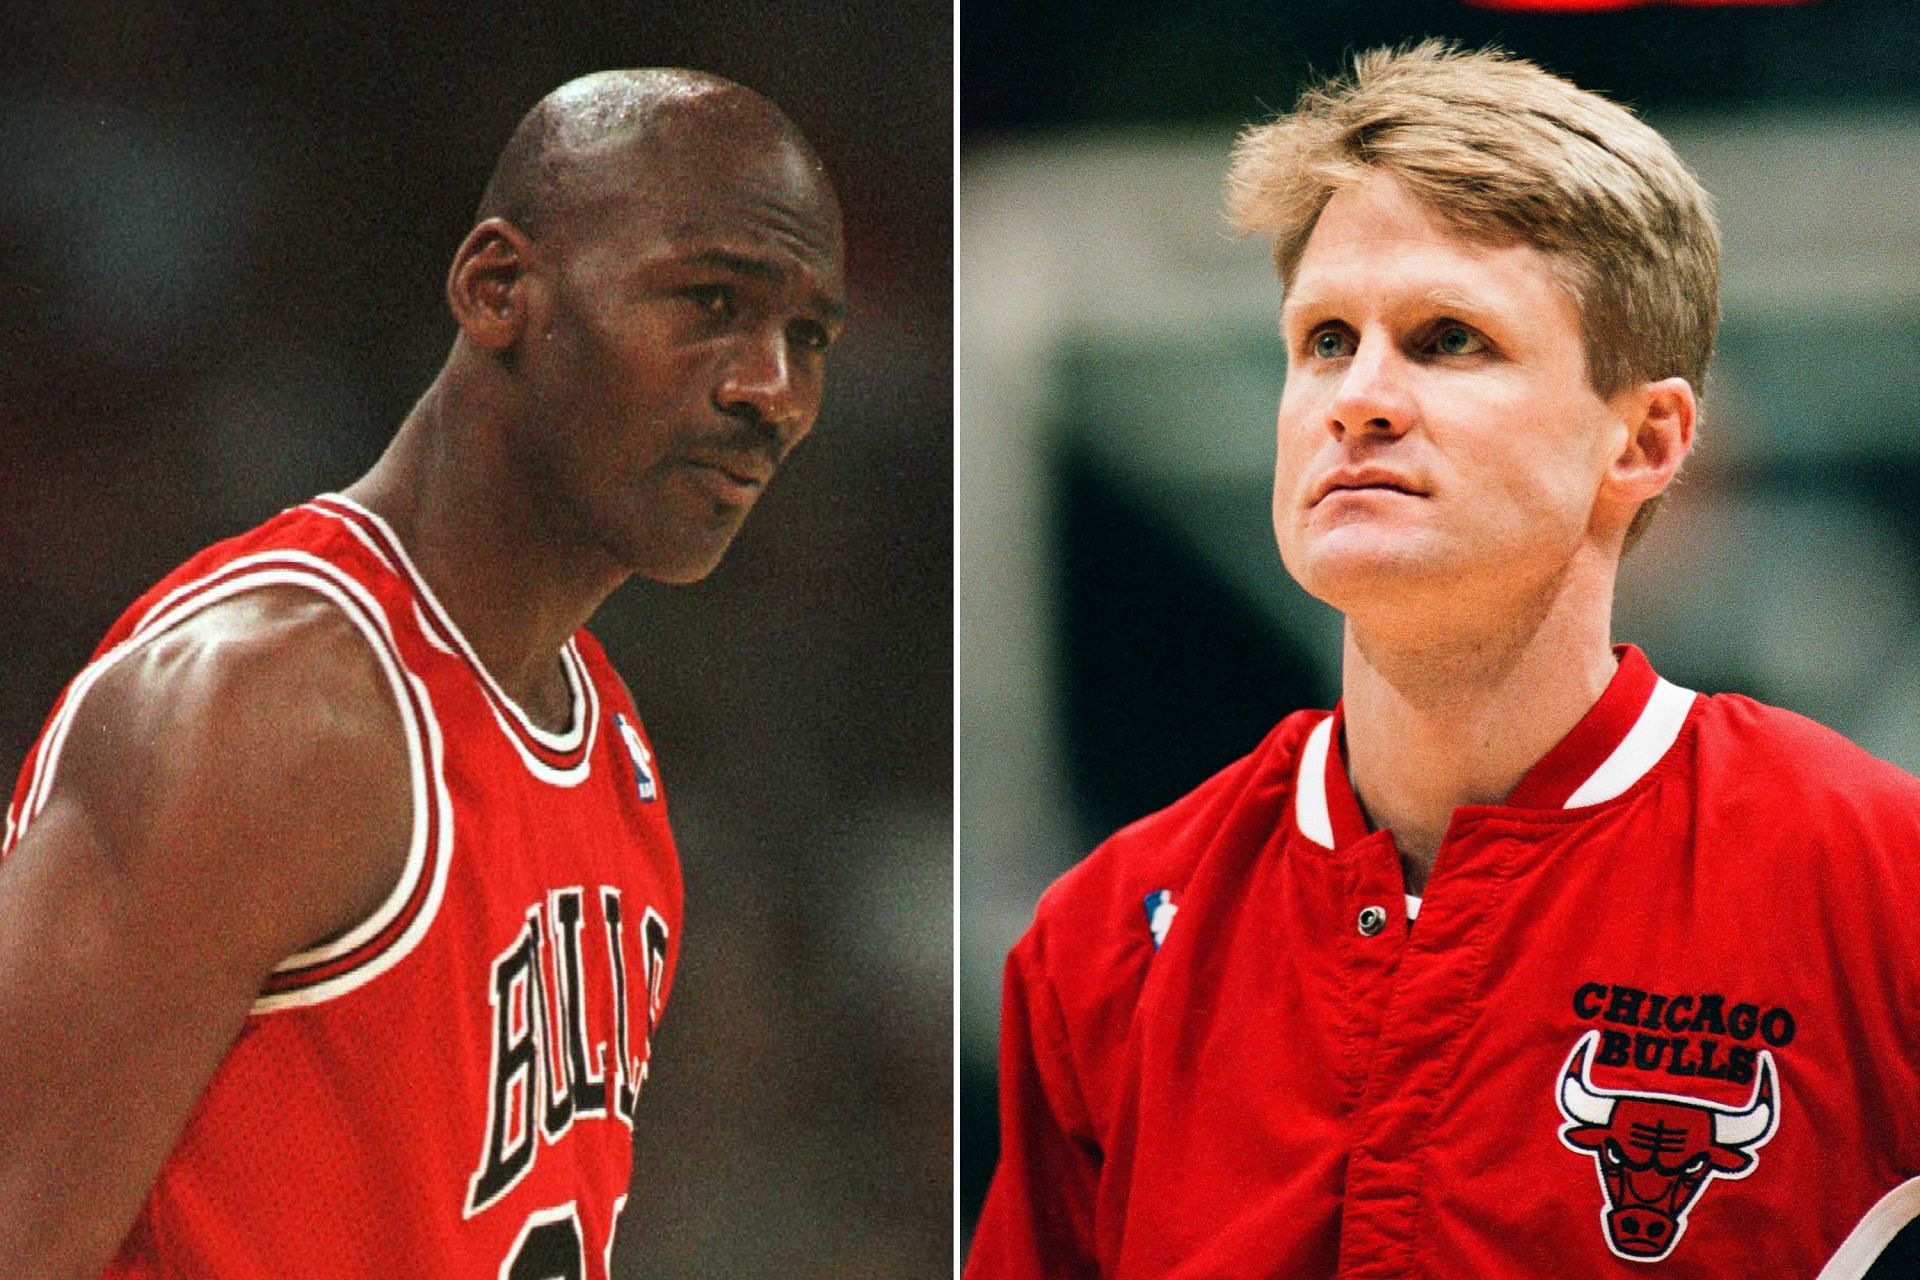 NBA legend Michael Jordan and former Chicago Bulls sharpshooter Steve Kerr